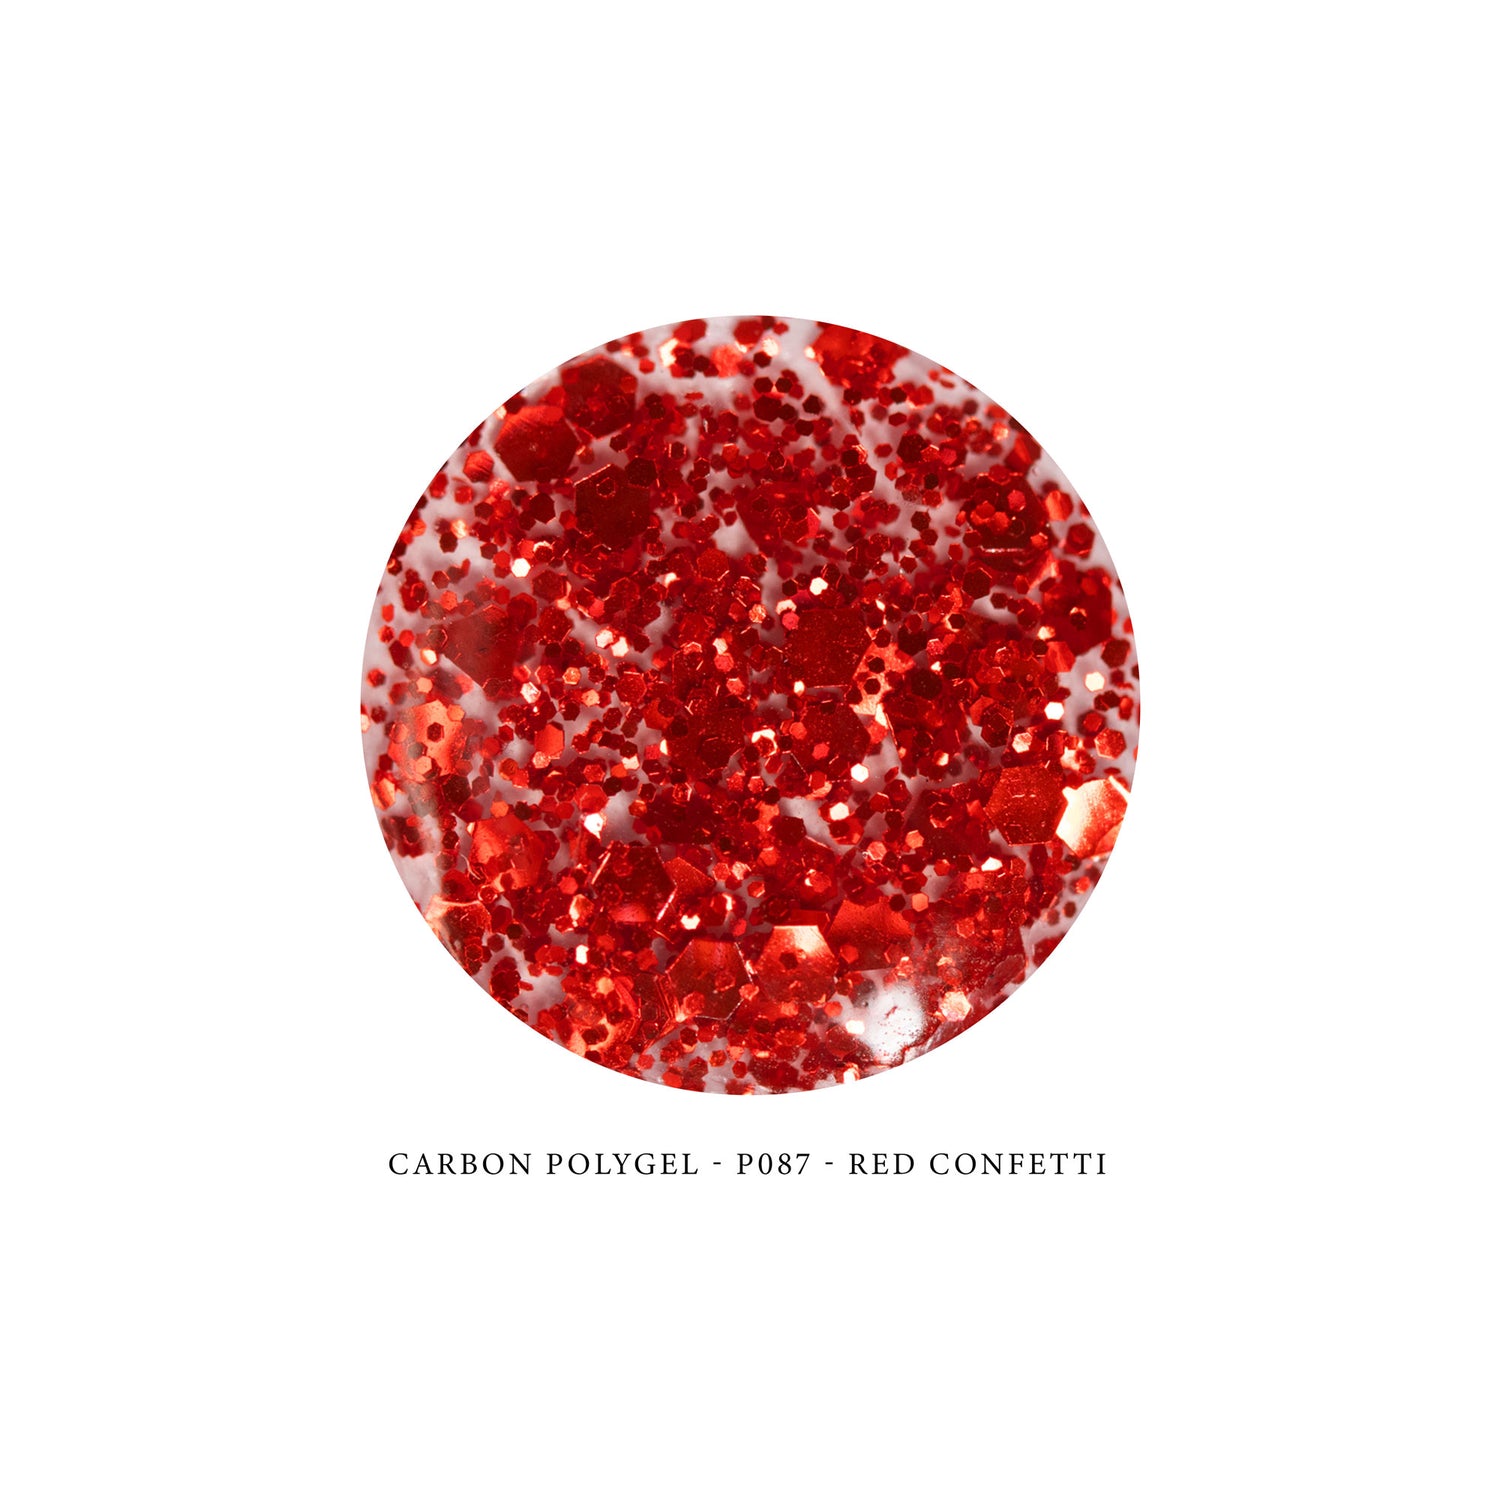 Carbon Polygel P087 - RED CONFETTI 30g